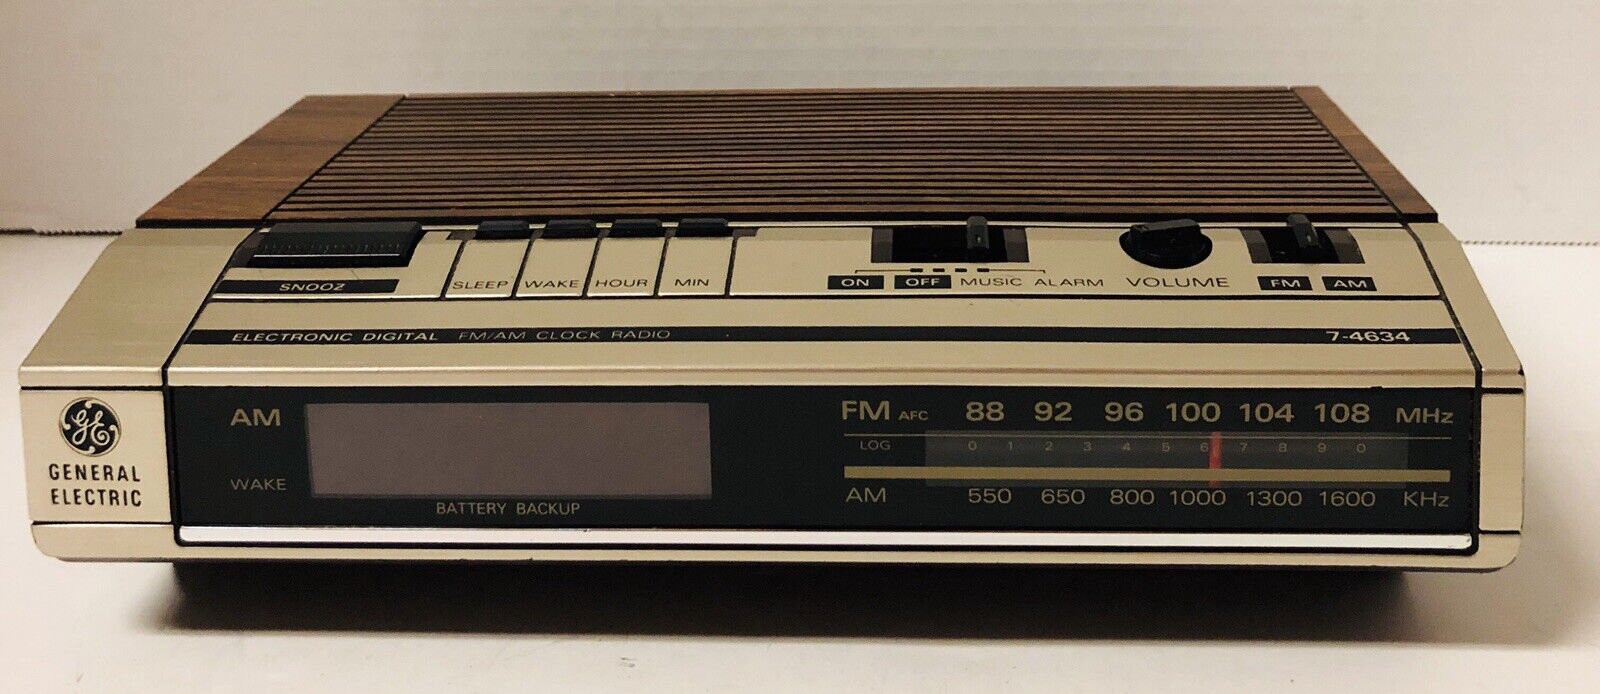 Vintage General Electric AM/FM Alarm Clock Radio Model 7-4634B Red Display 1970s